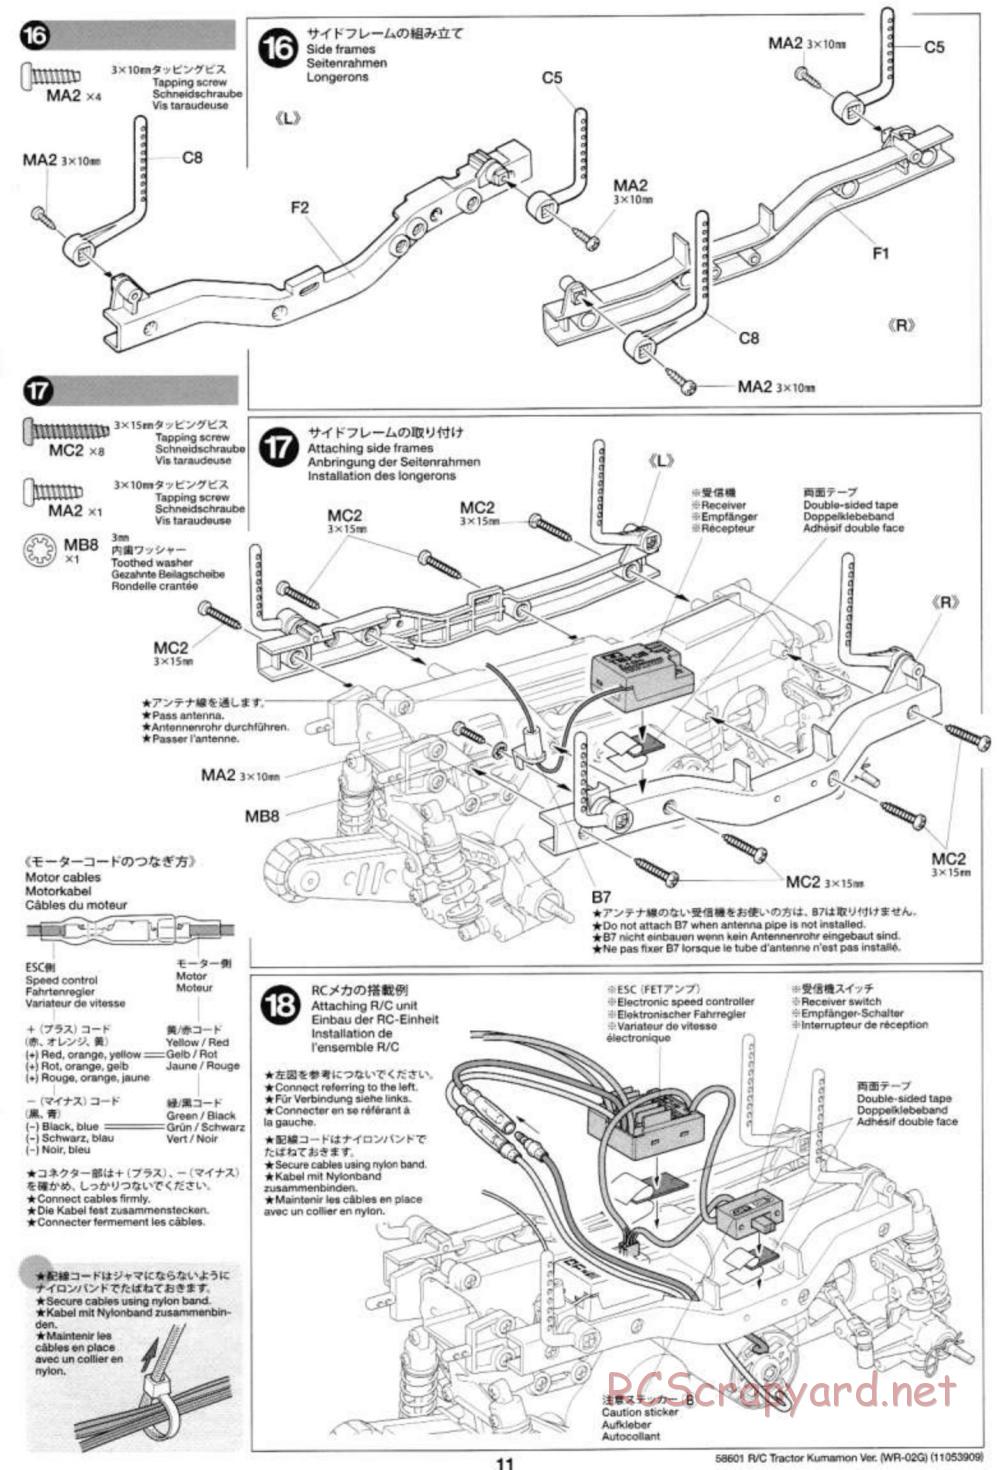 Tamiya - Tractor Kumamon Version Chassis - Manual - Page 11